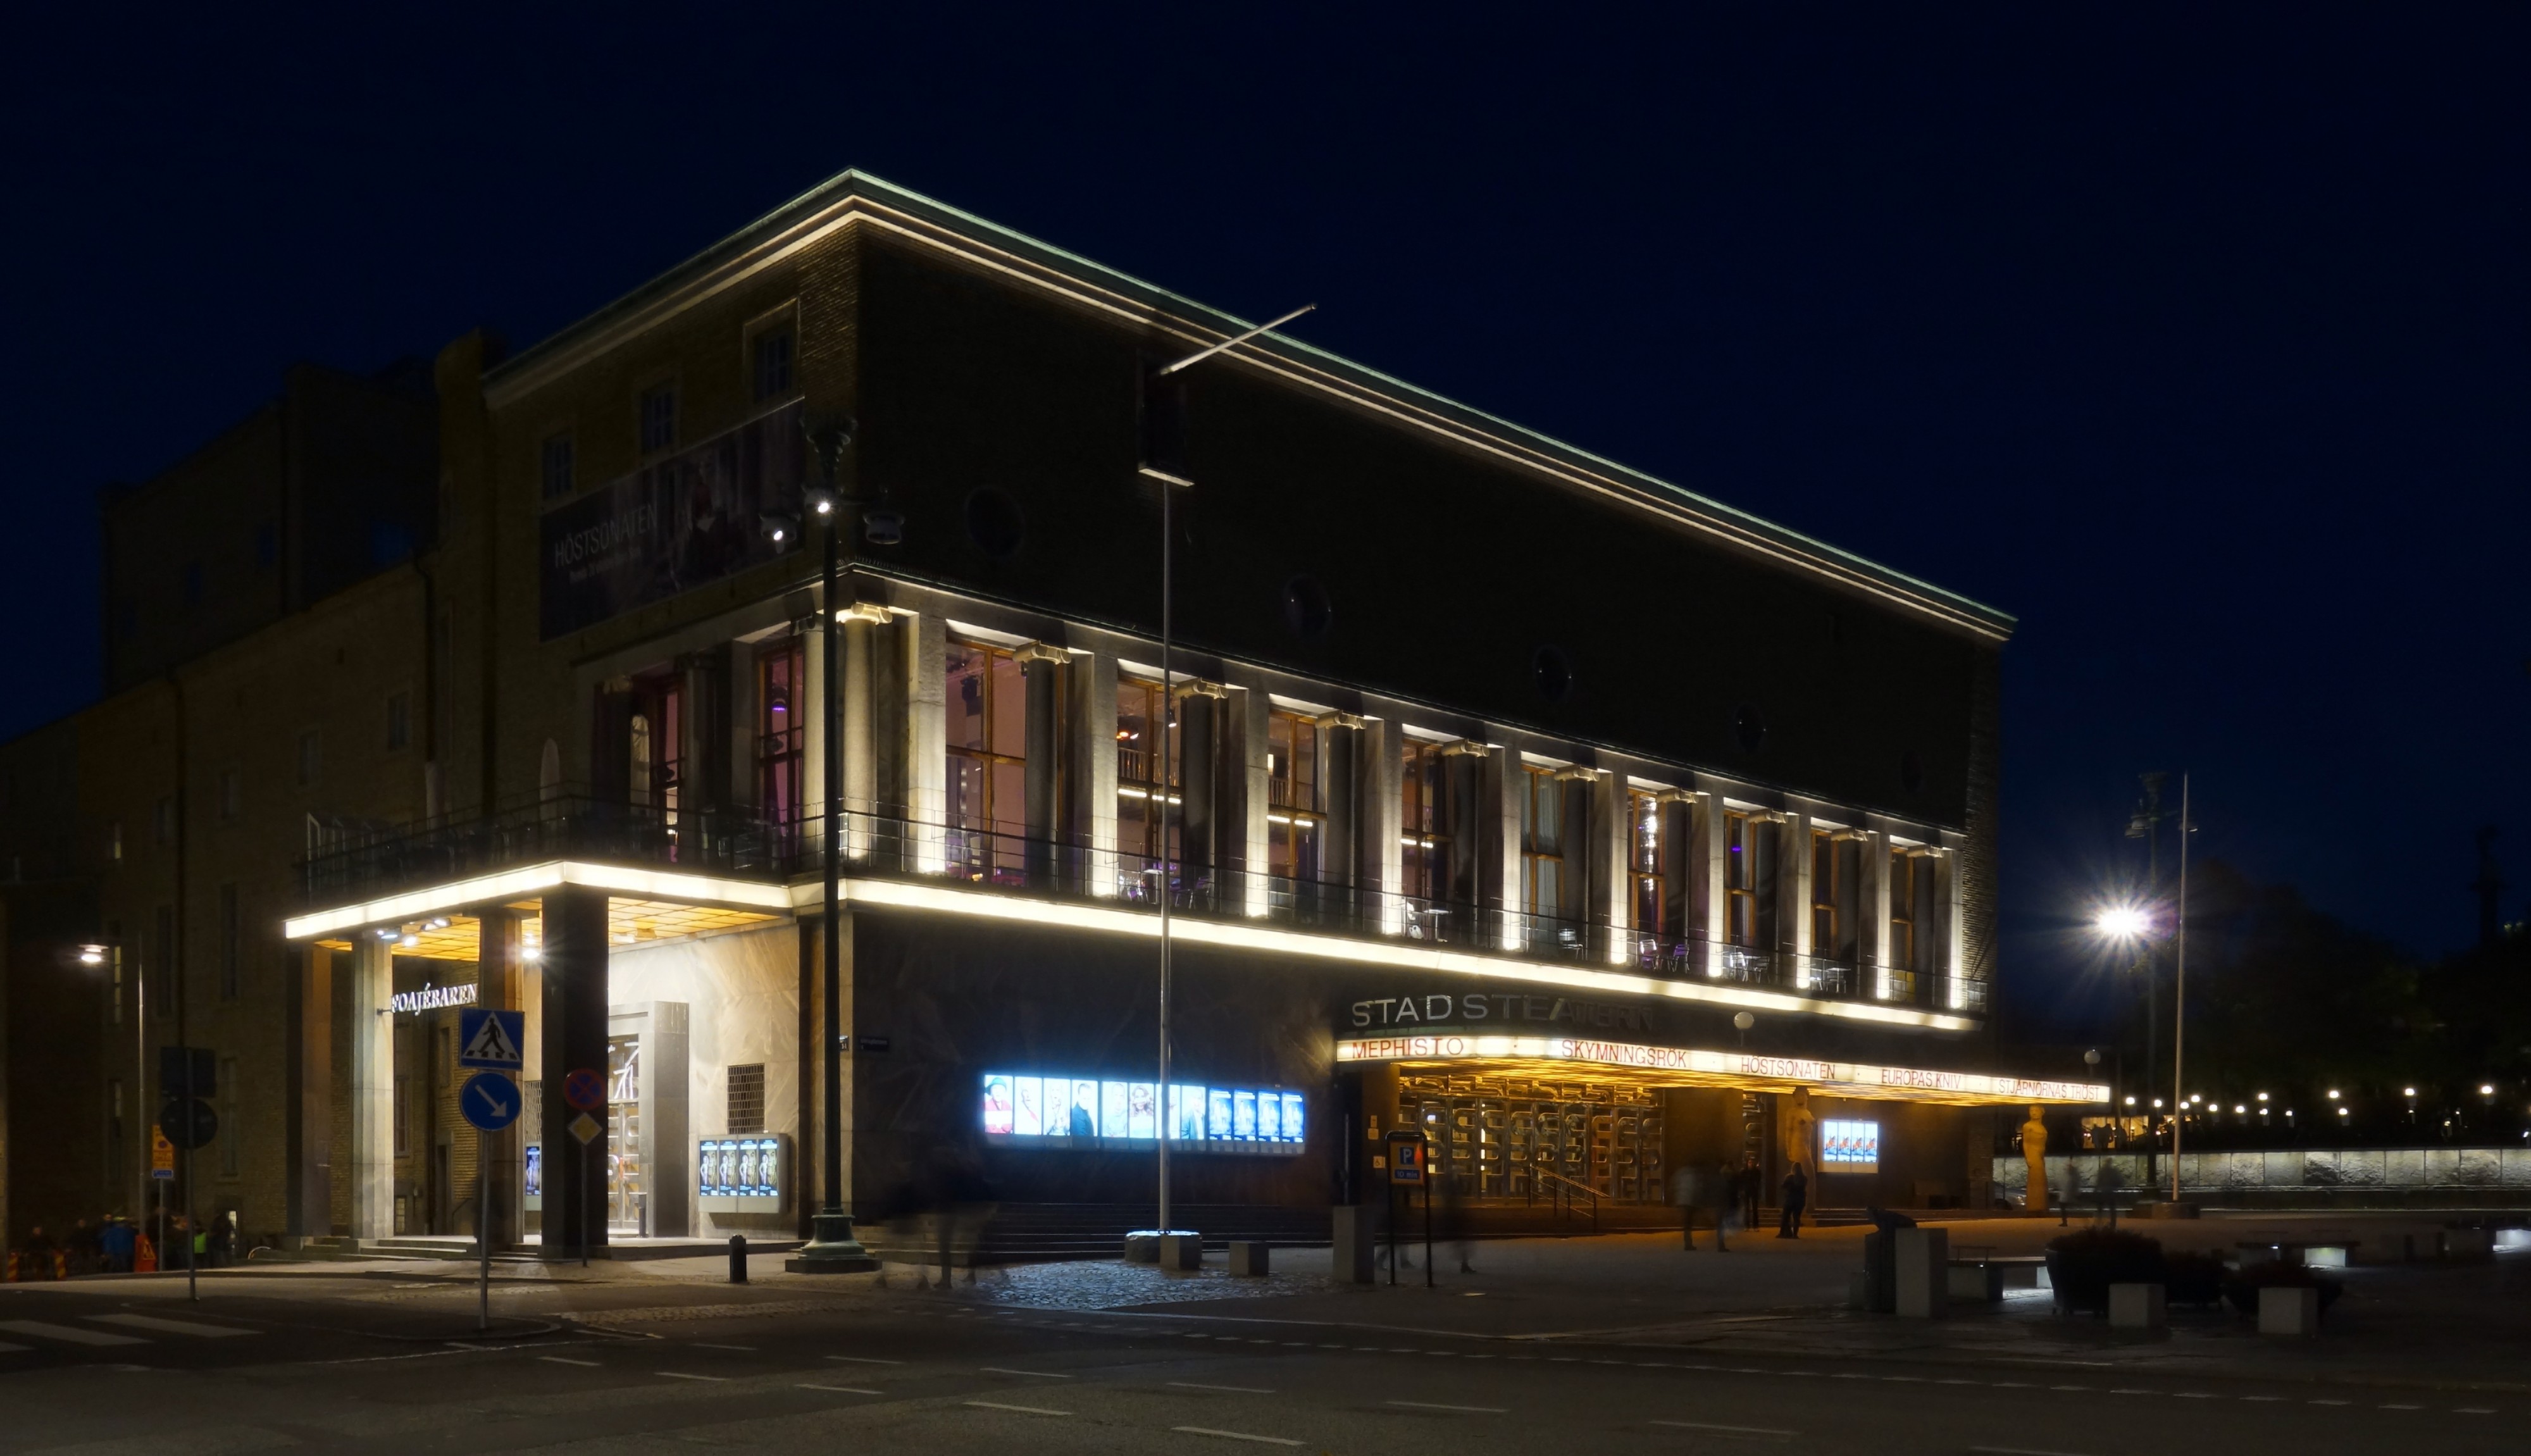 Gothenburg City Theatre at night